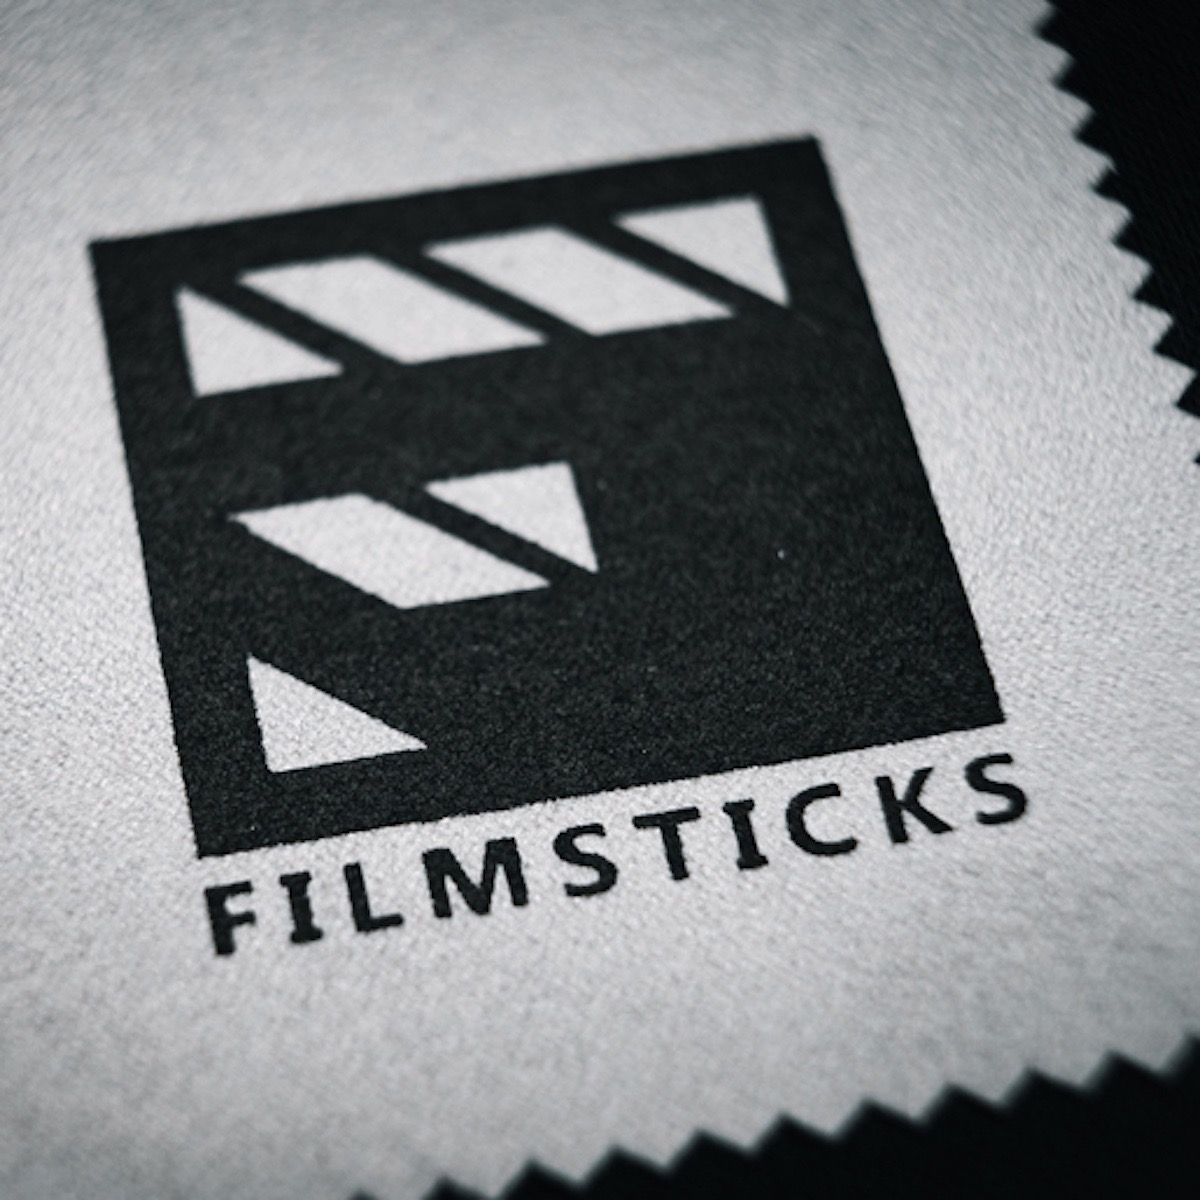 Filmsticks Microfibre Cloth Mikrofasertuch